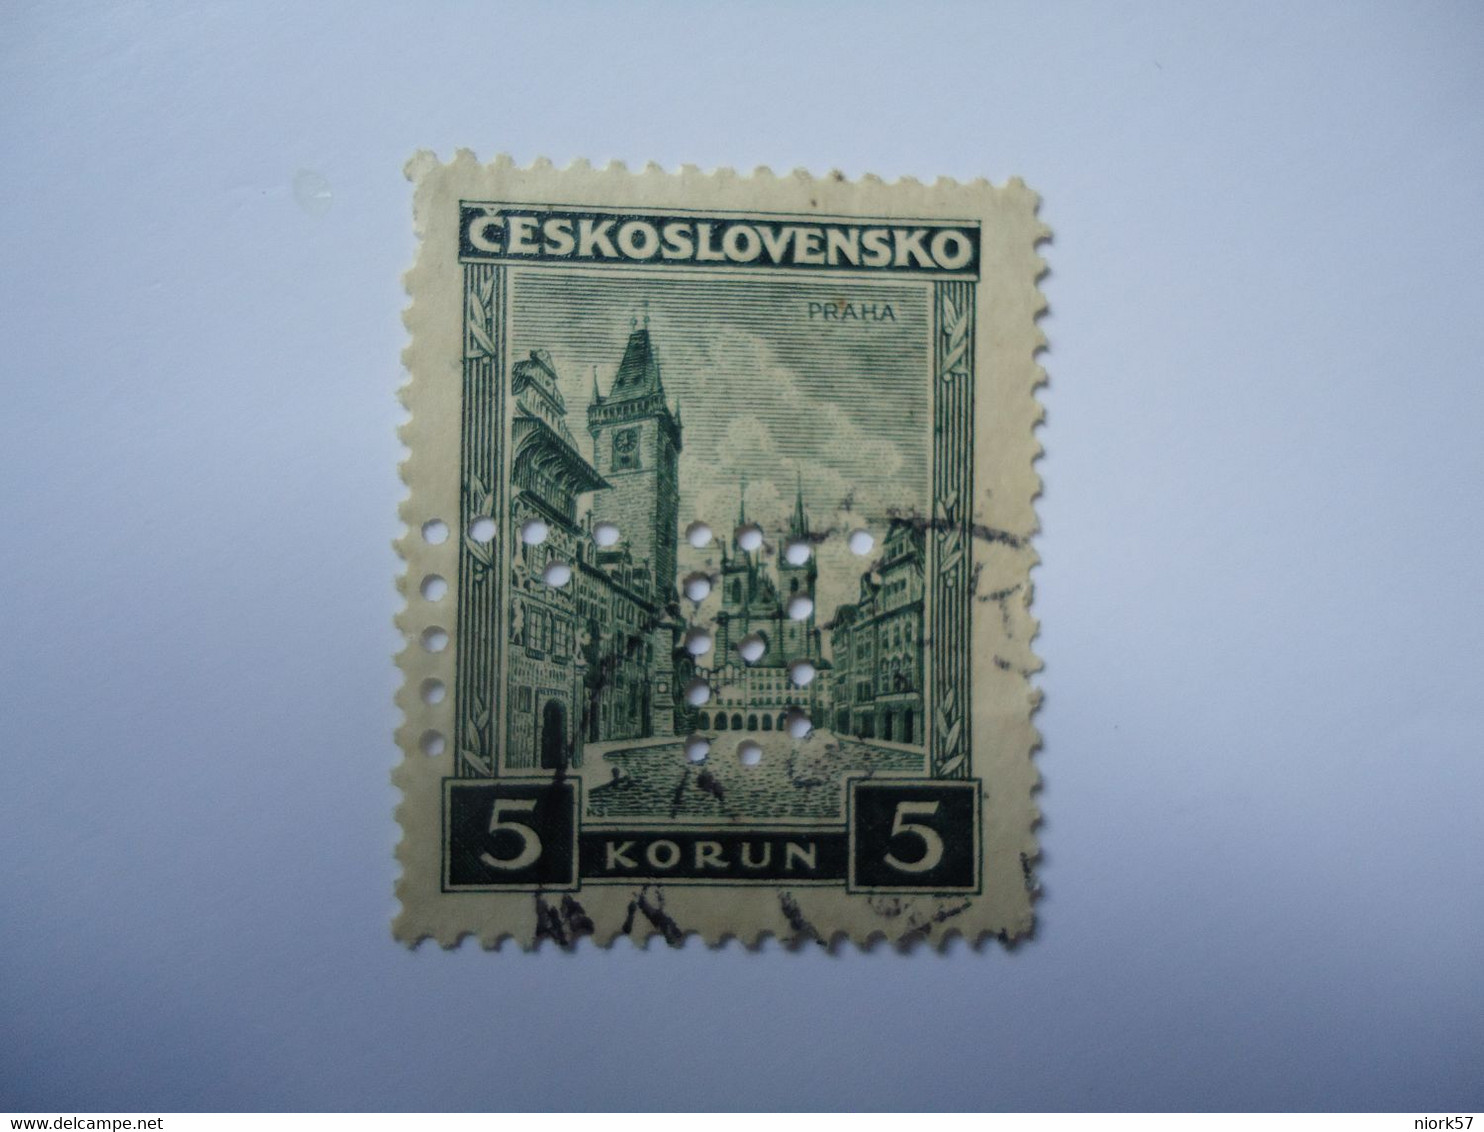 CZECHOSLOVAKIA    USED STAMPS WITH PERFINS  2 SCAN  WITH POSTMARK - Proeven & Herdrukken